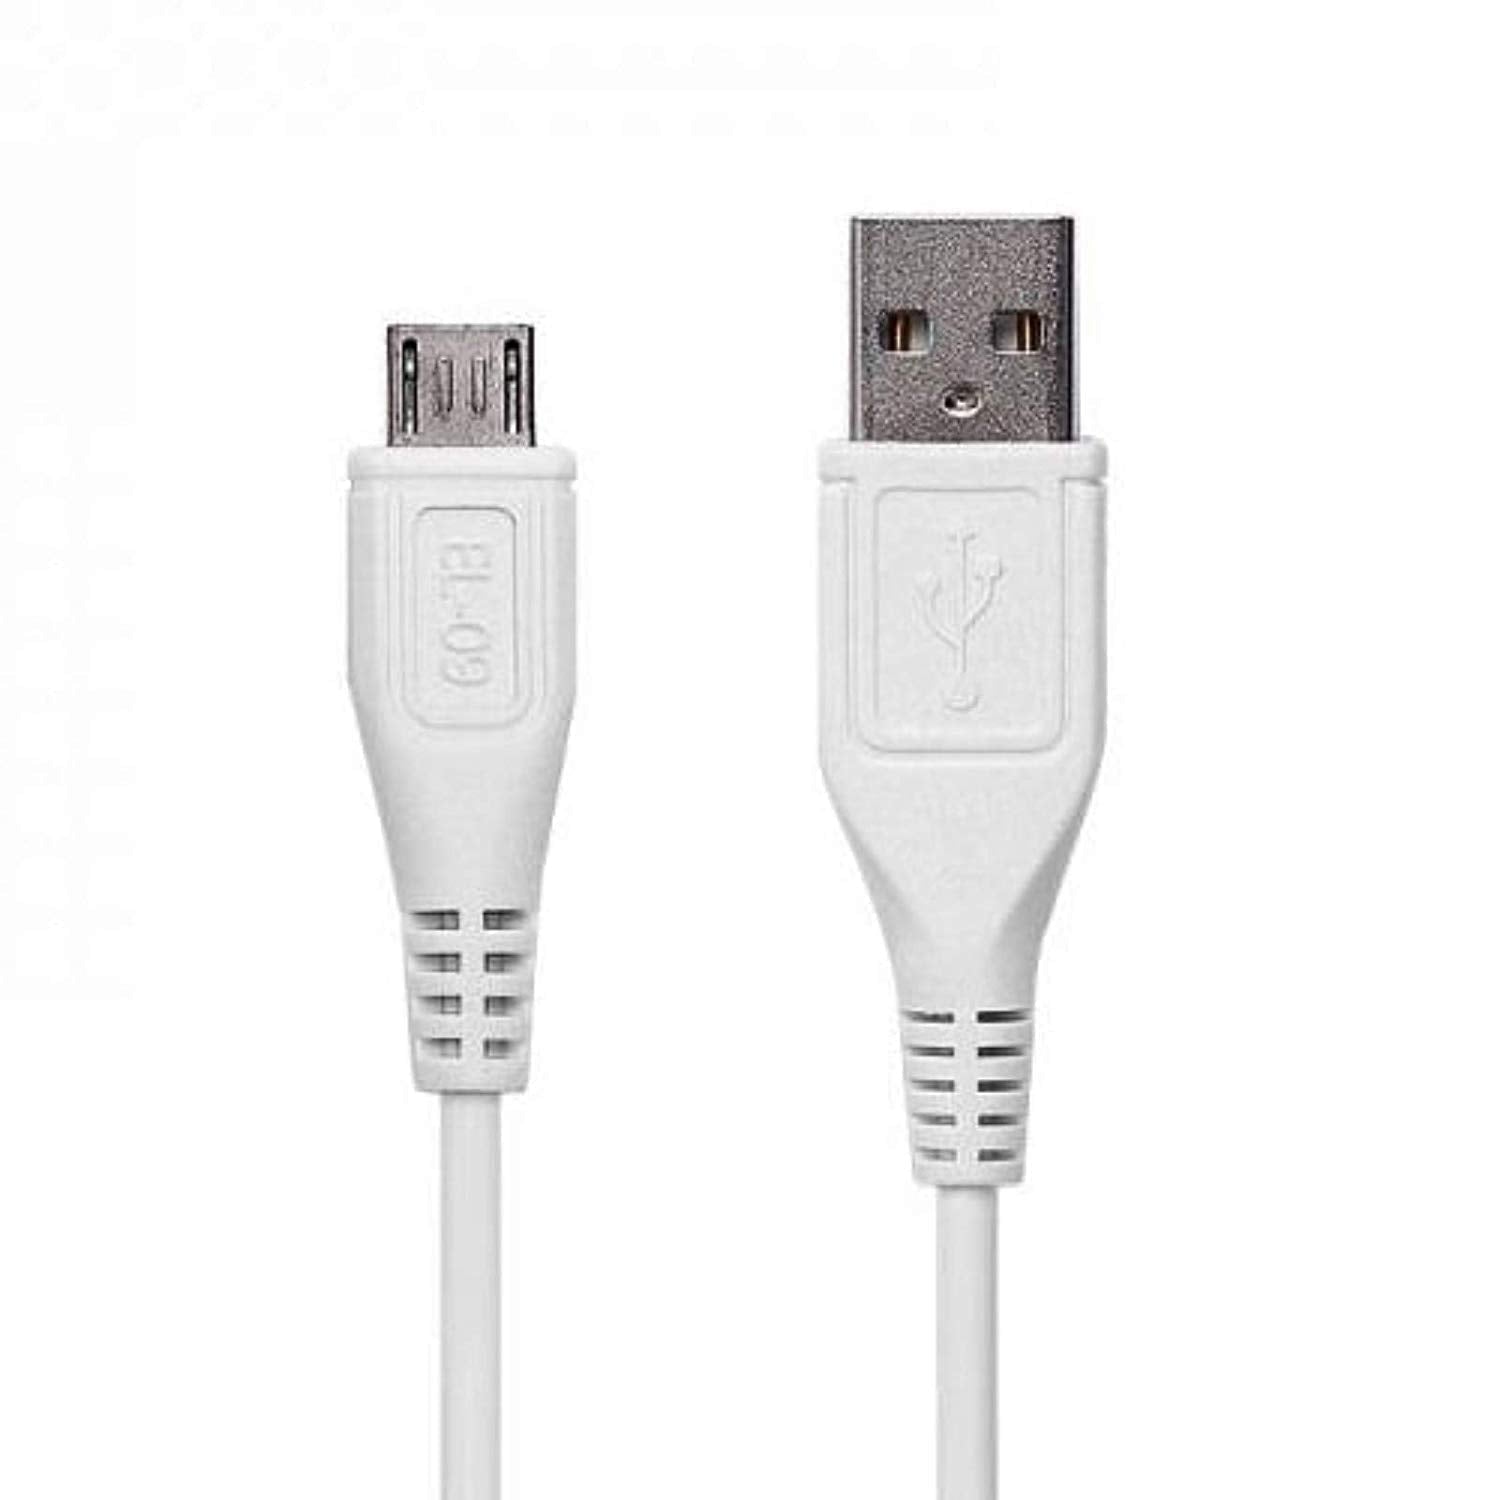 Vivo U10 Fast Charging Micro Data Cable White - 1 Meter